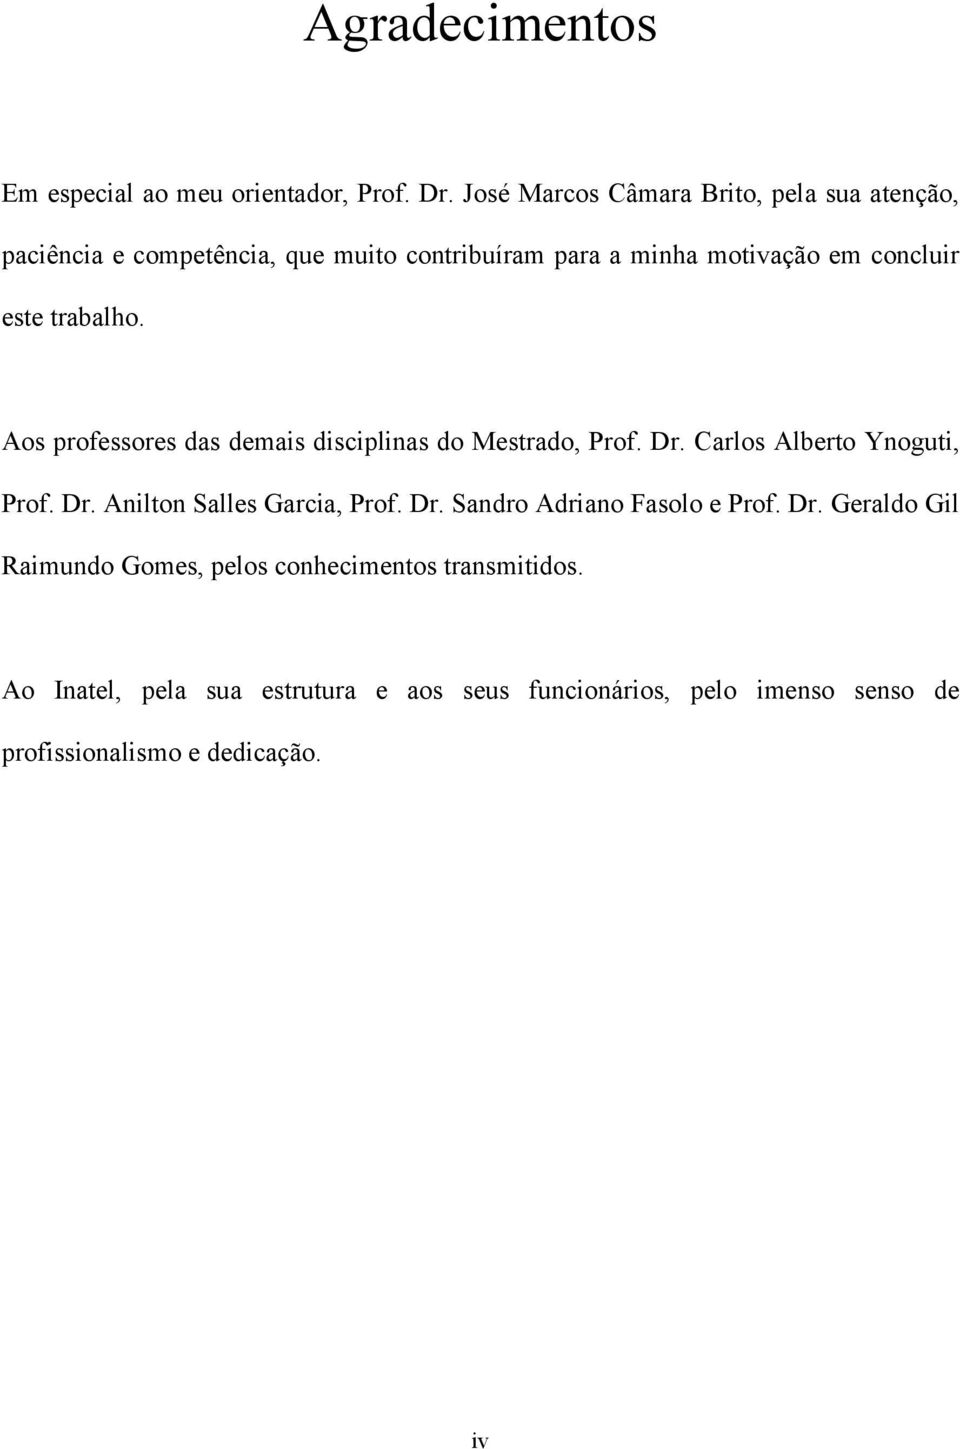 trabalho. Aos professores das demais disciplinas do Mestrado, Prof. Dr. Carlos Alberto Ynoguti, Prof. Dr. Anilton Salles Garcia, Prof.